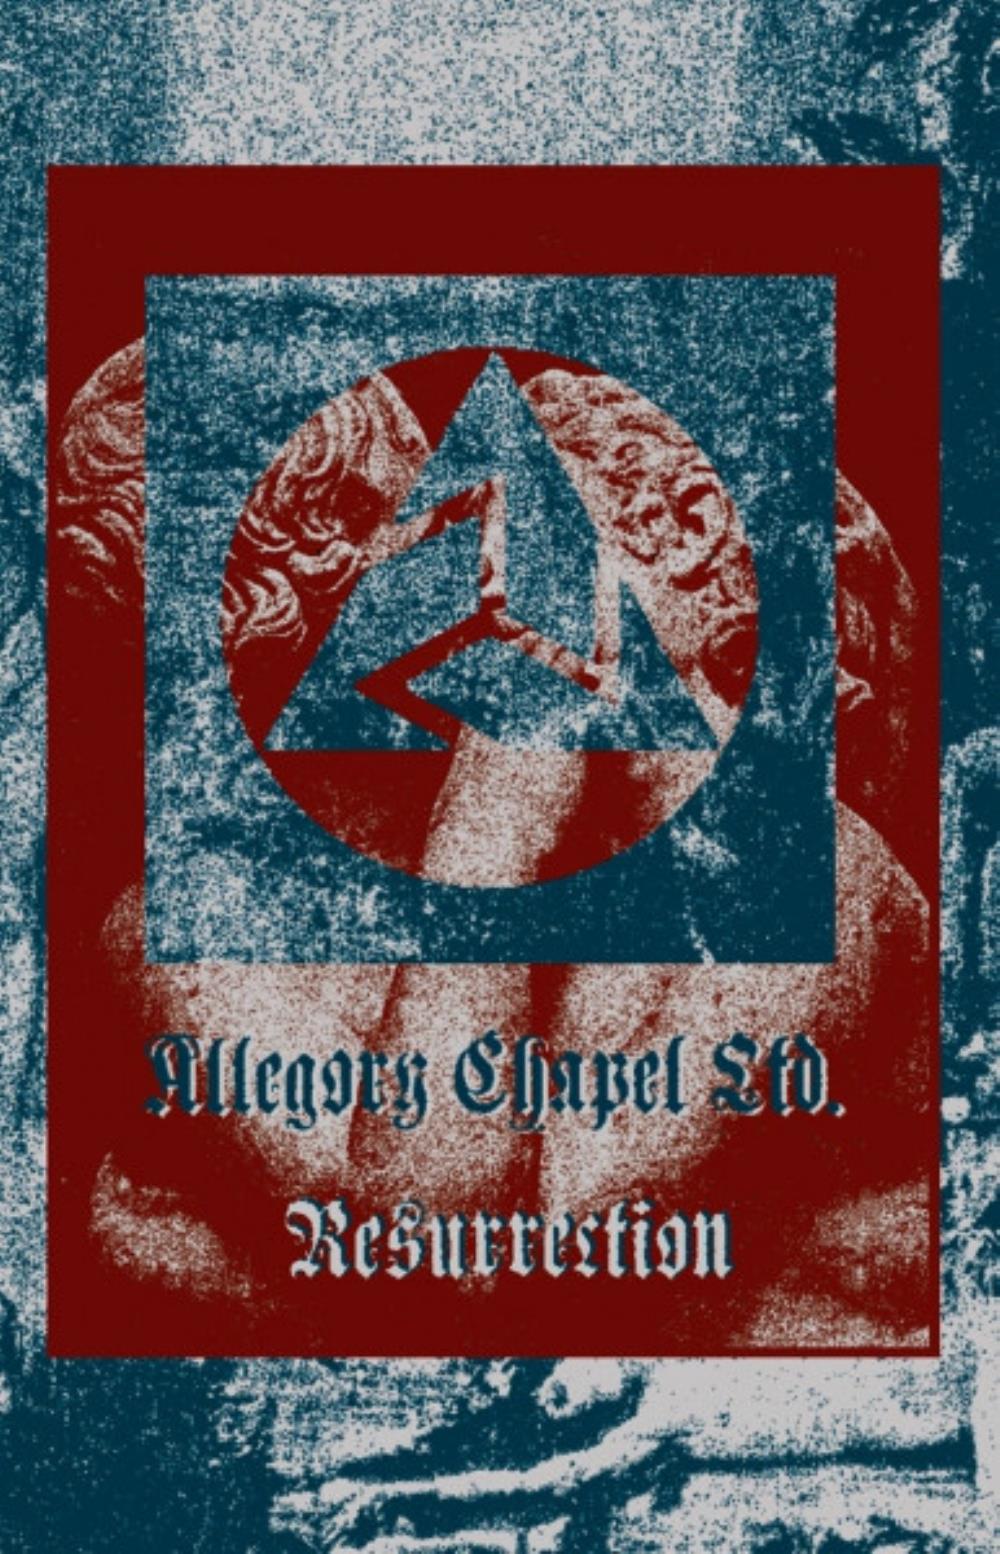 Allegory Chapel Ltd Resurrection album cover